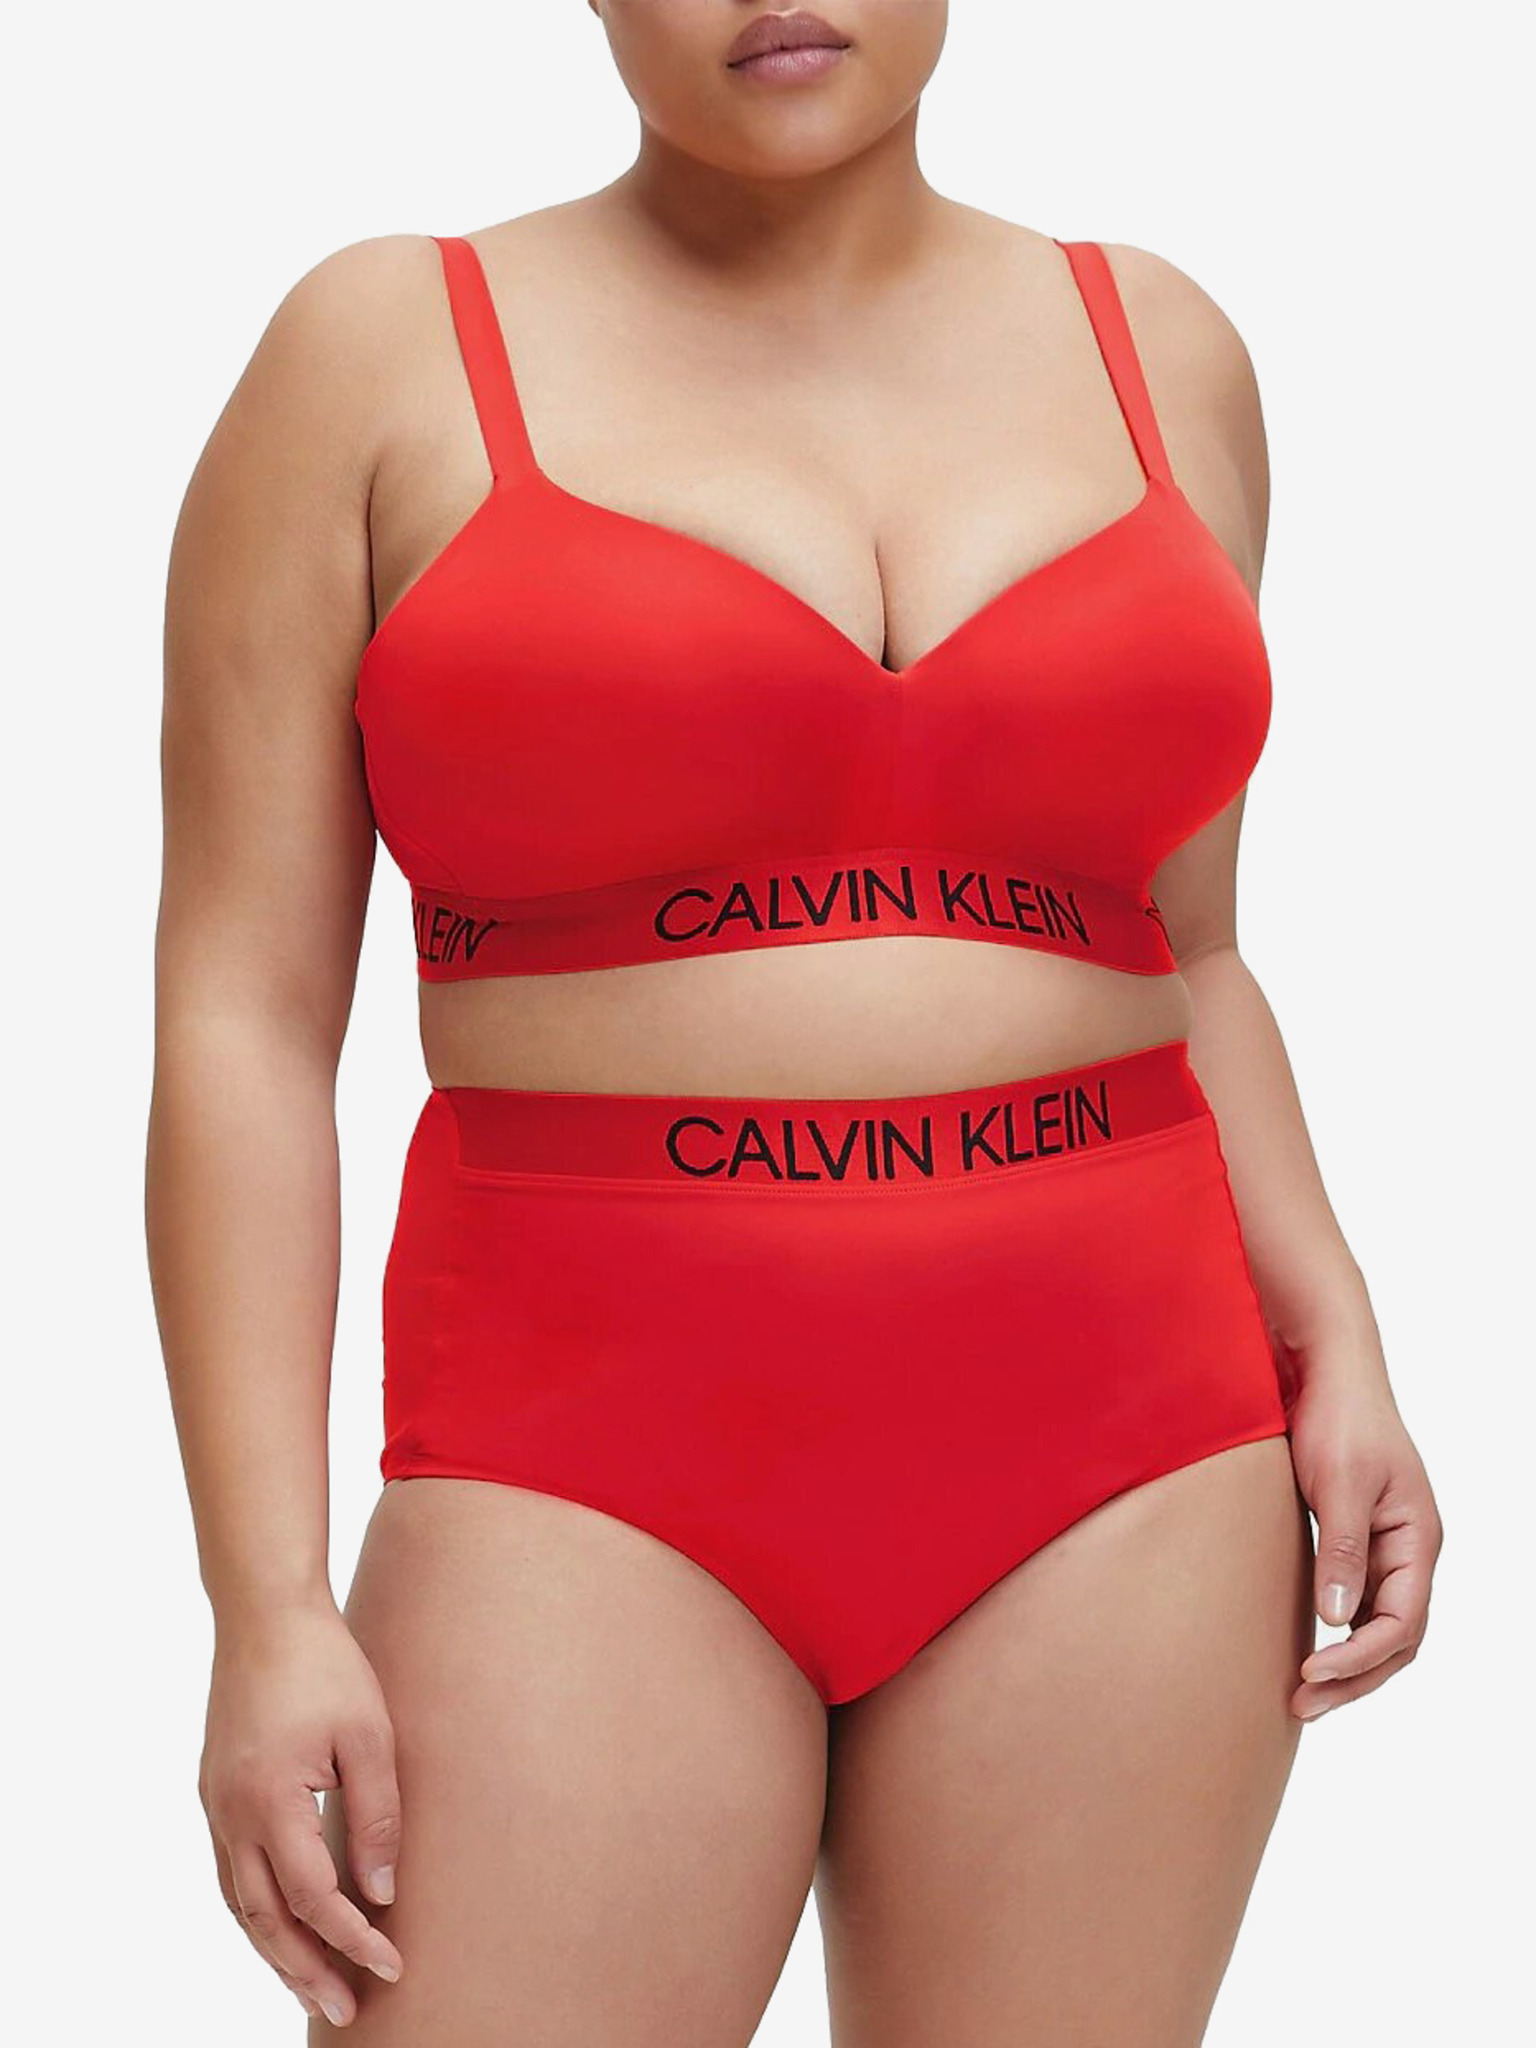 Calvin Klein Underwear - Demi Bralette Plus Size High Risk Bikini